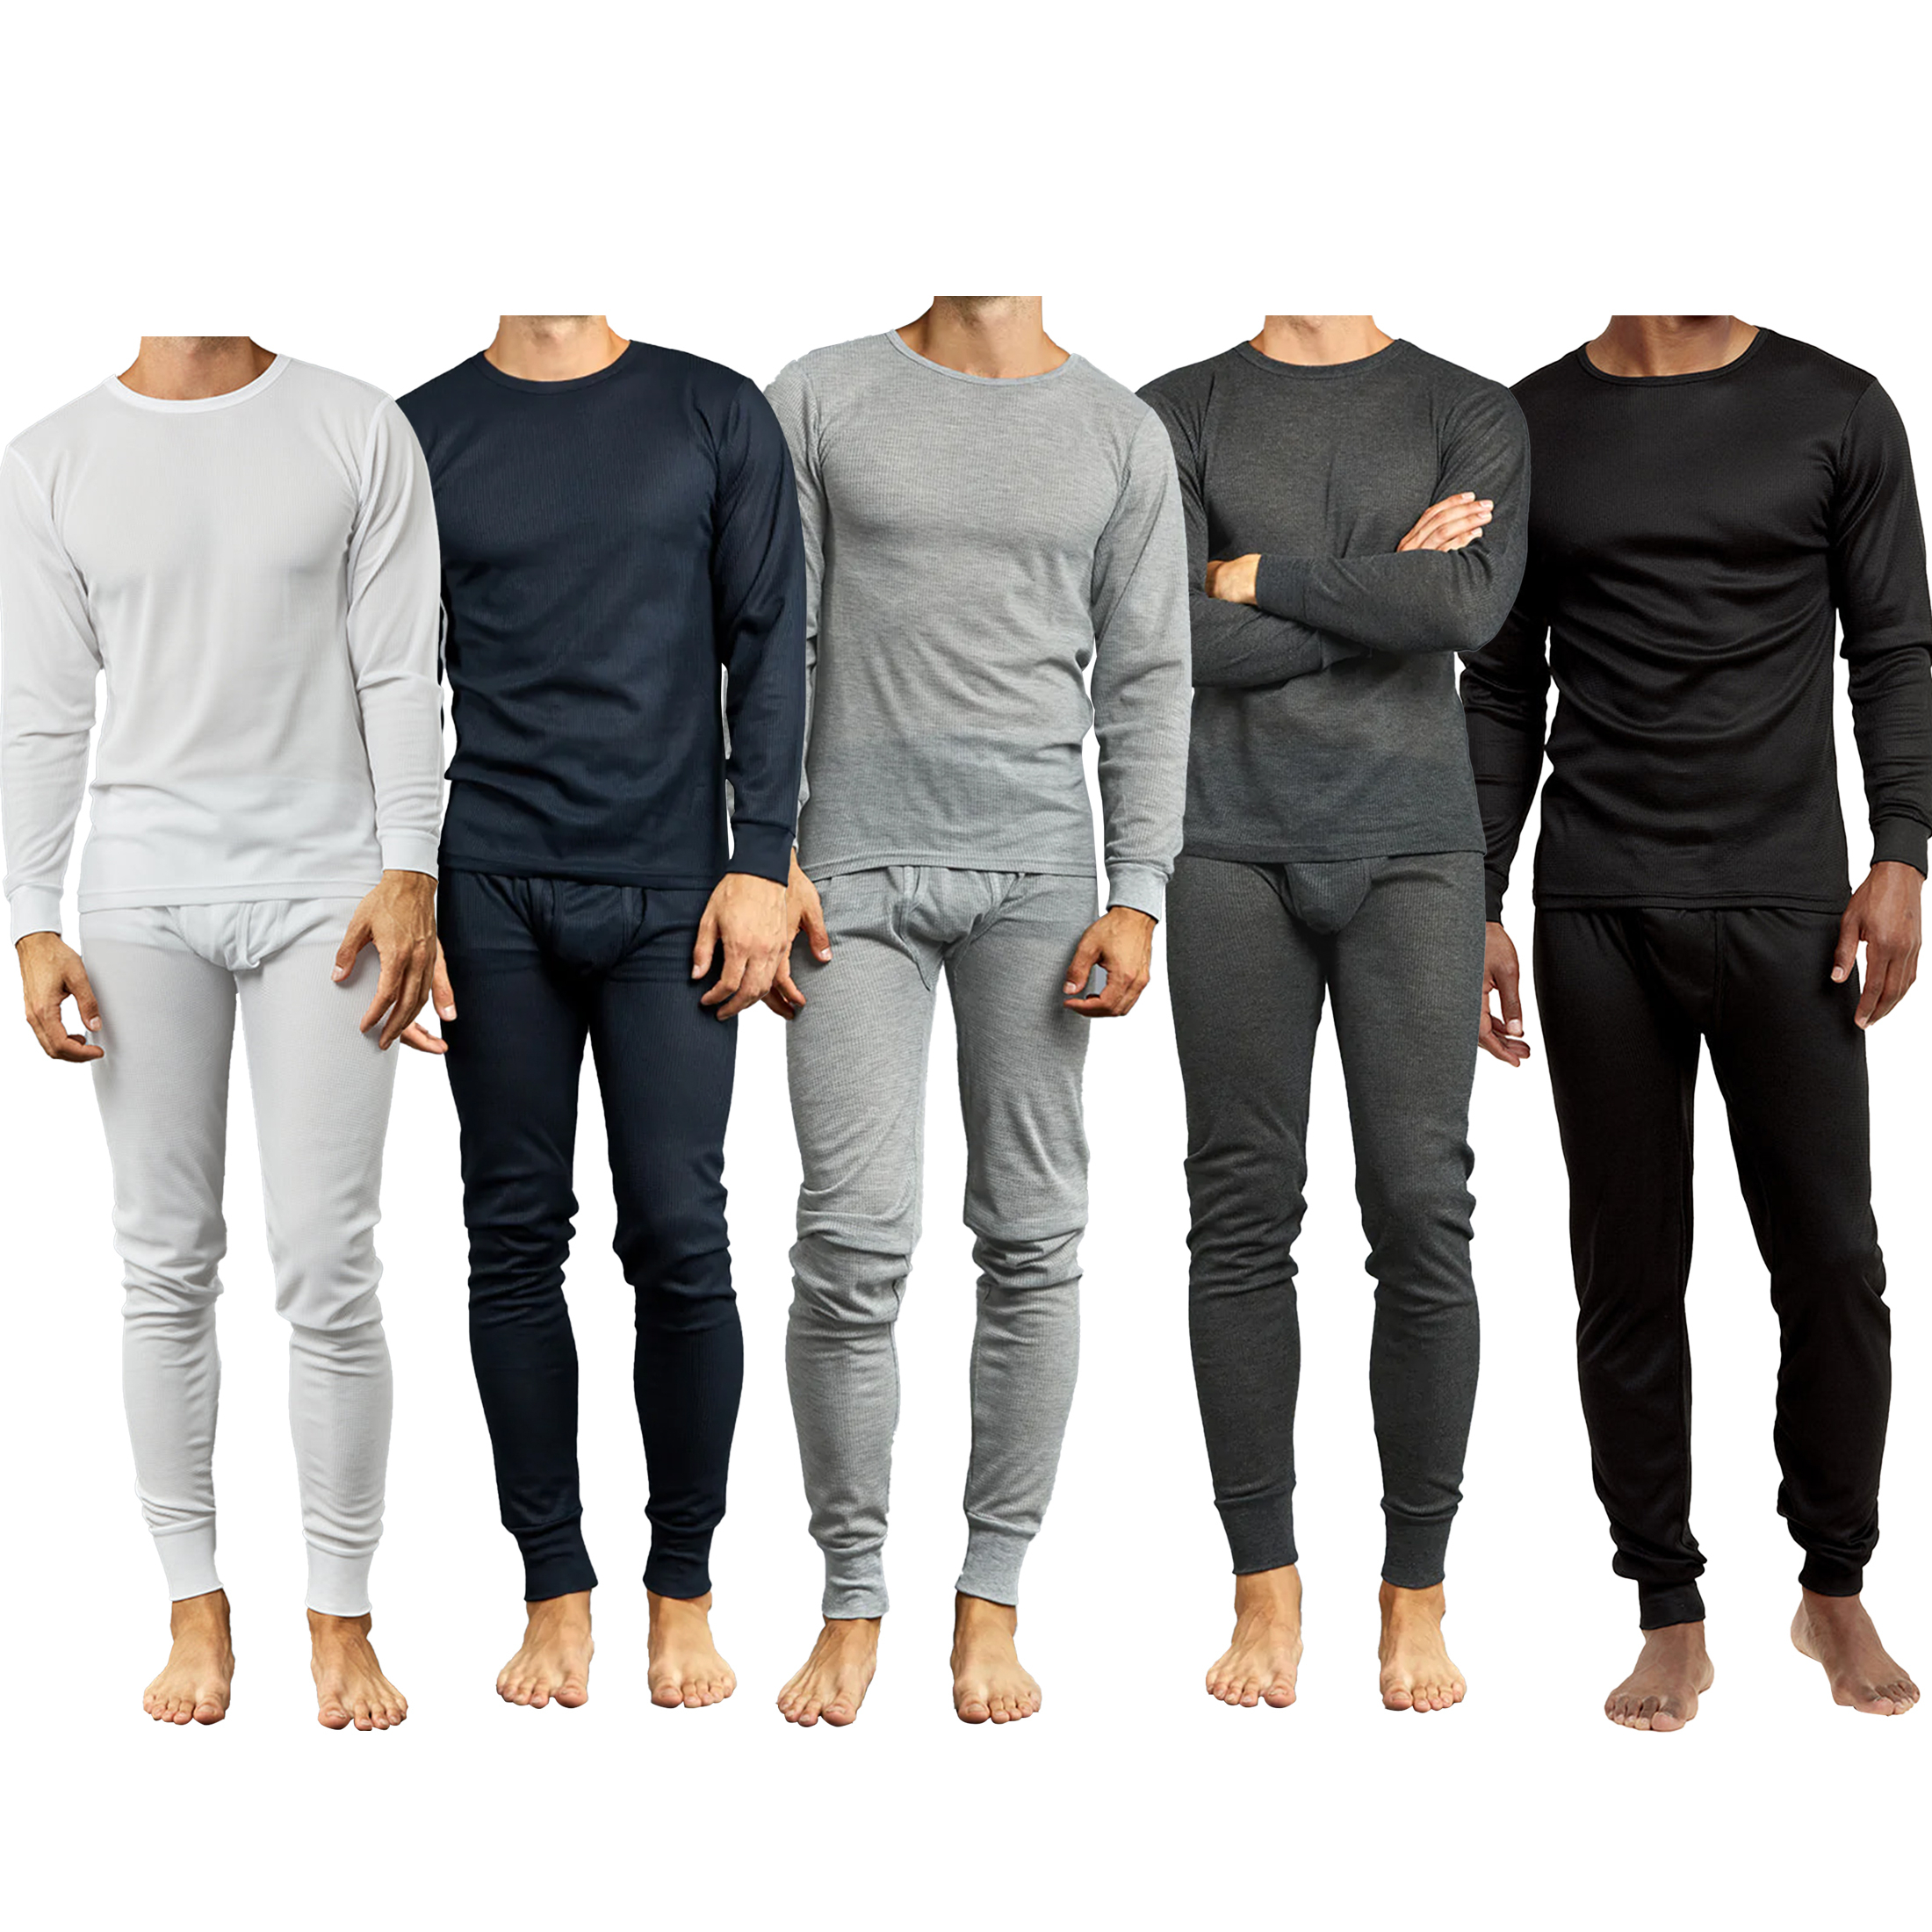 2-Piece: Men's Moisture Wicking Long Johns Base Layer Thermal Underwear Set (Top & Bottom) - White, Medium